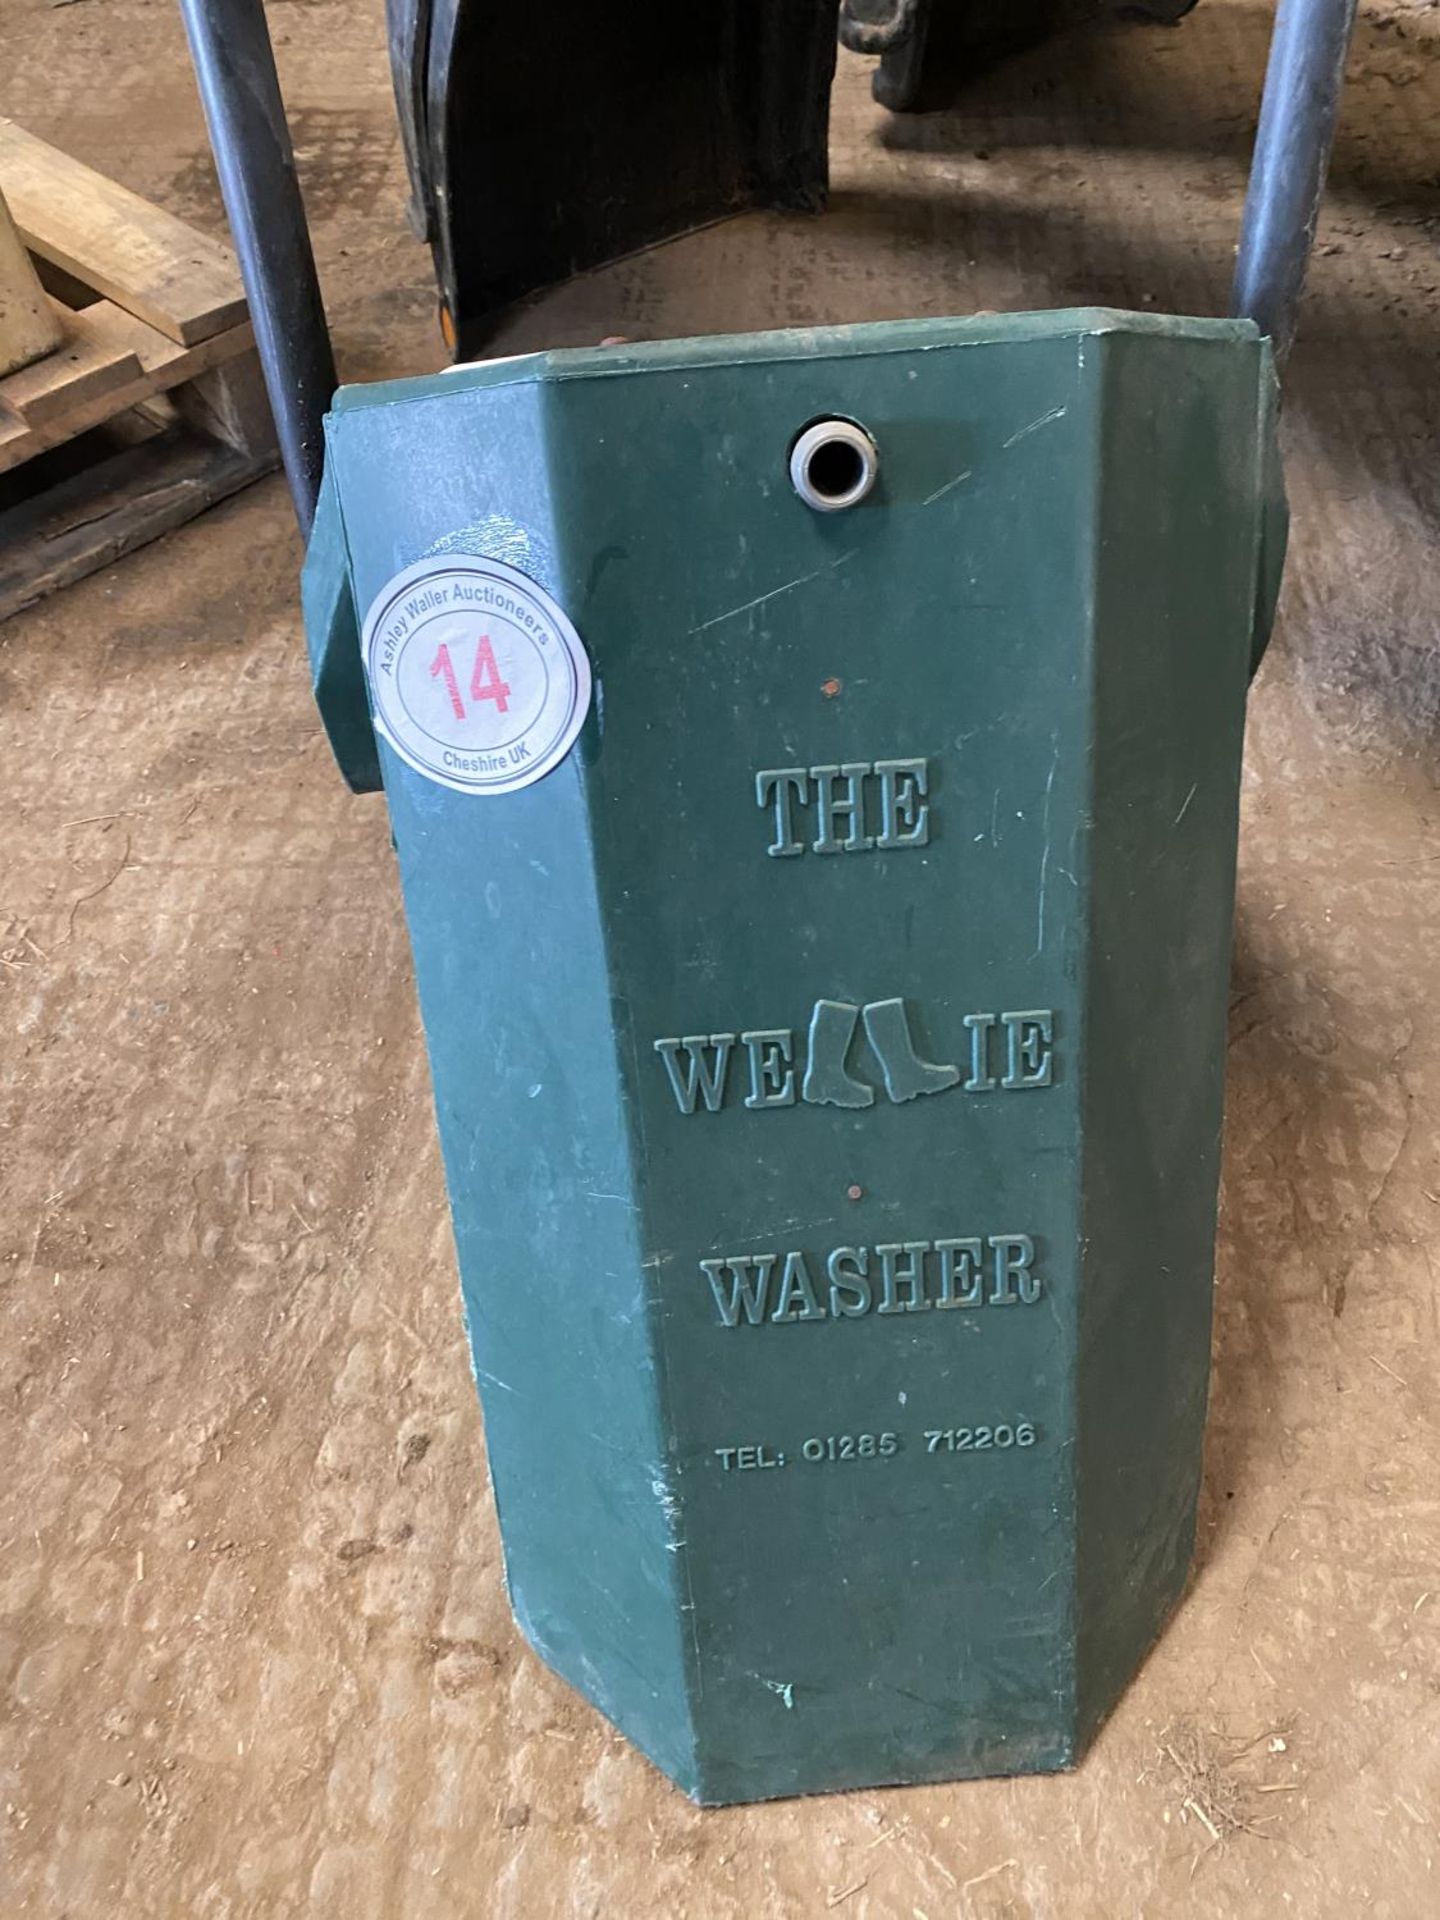 WELLINGTON BOOT WASHER - LITTLE USED